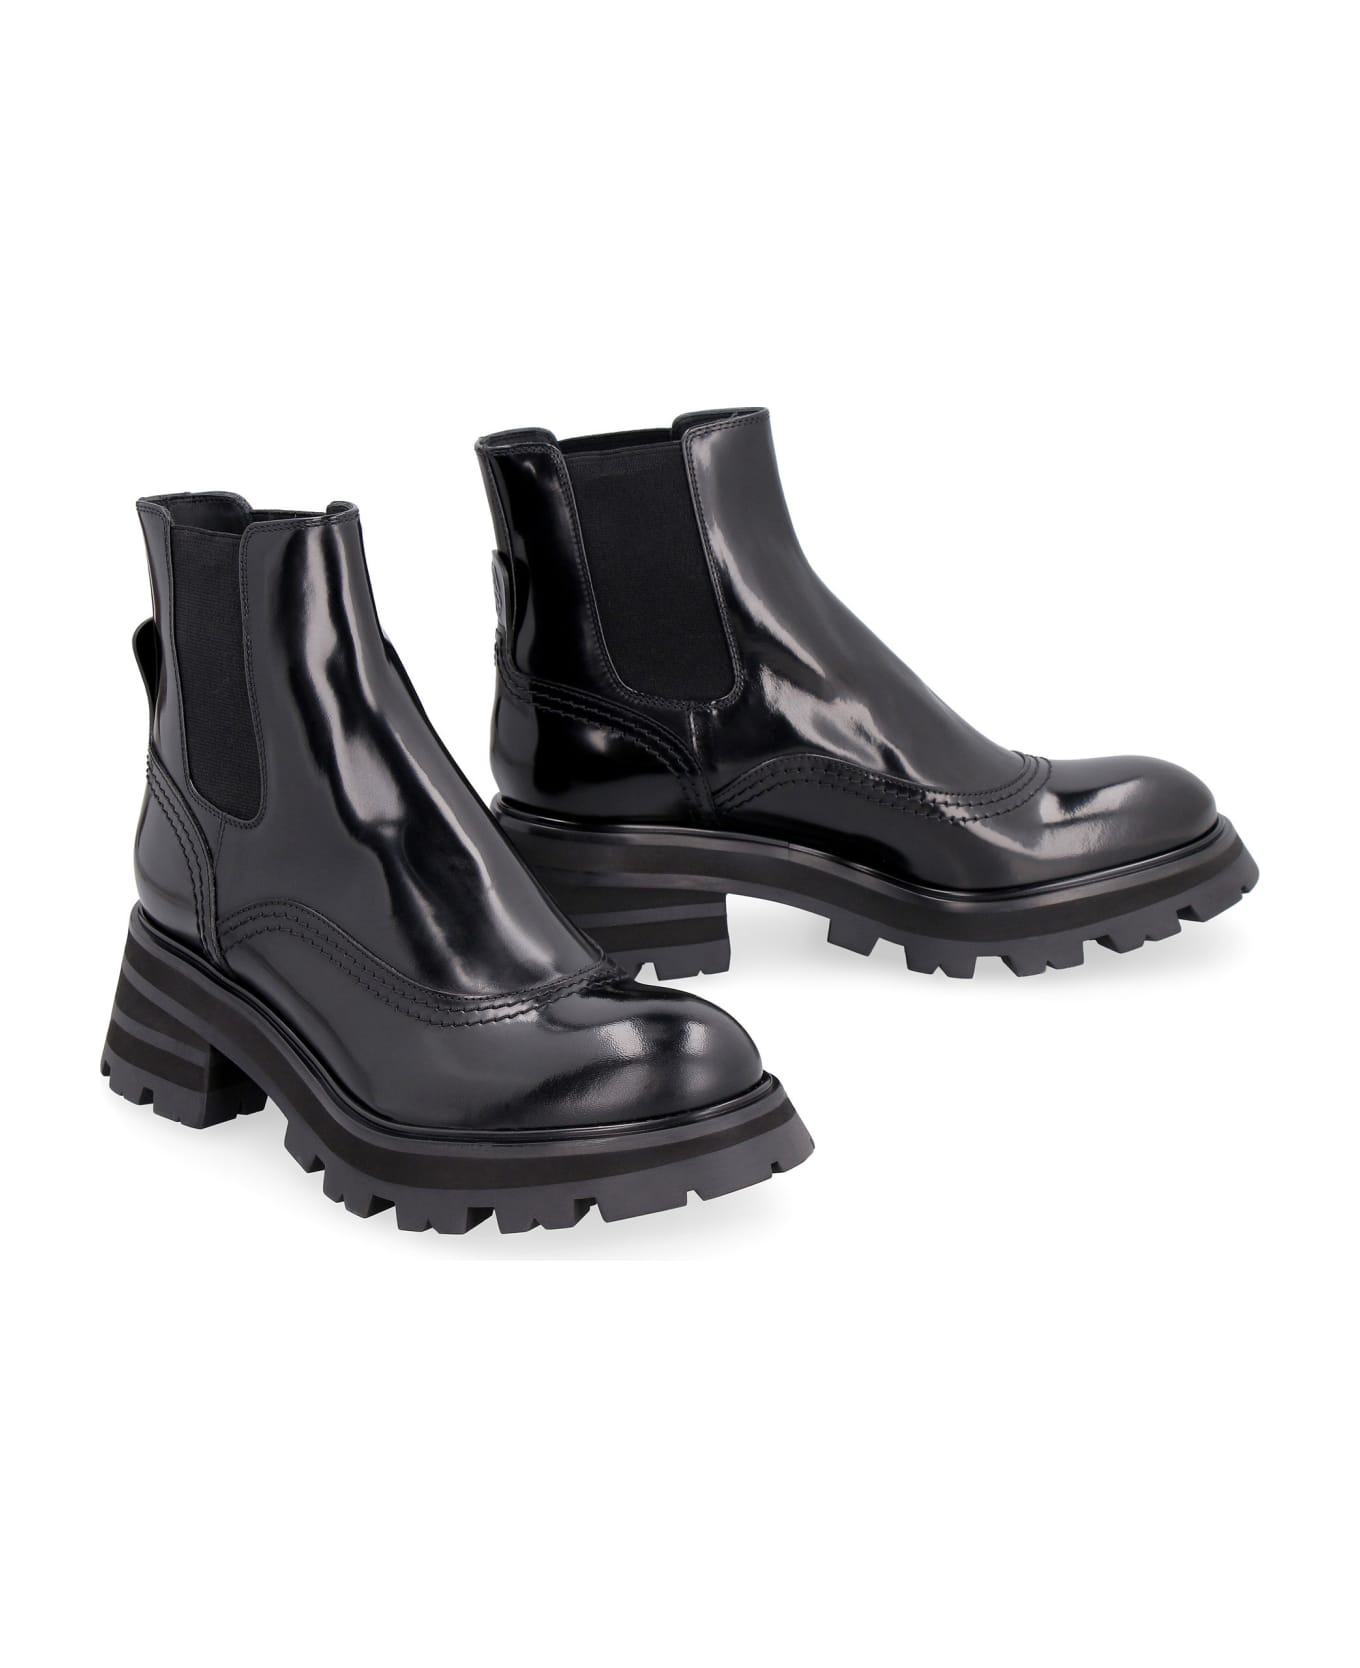 Alexander McQueen Wander Leather Chelsea Boots - black ブーツ